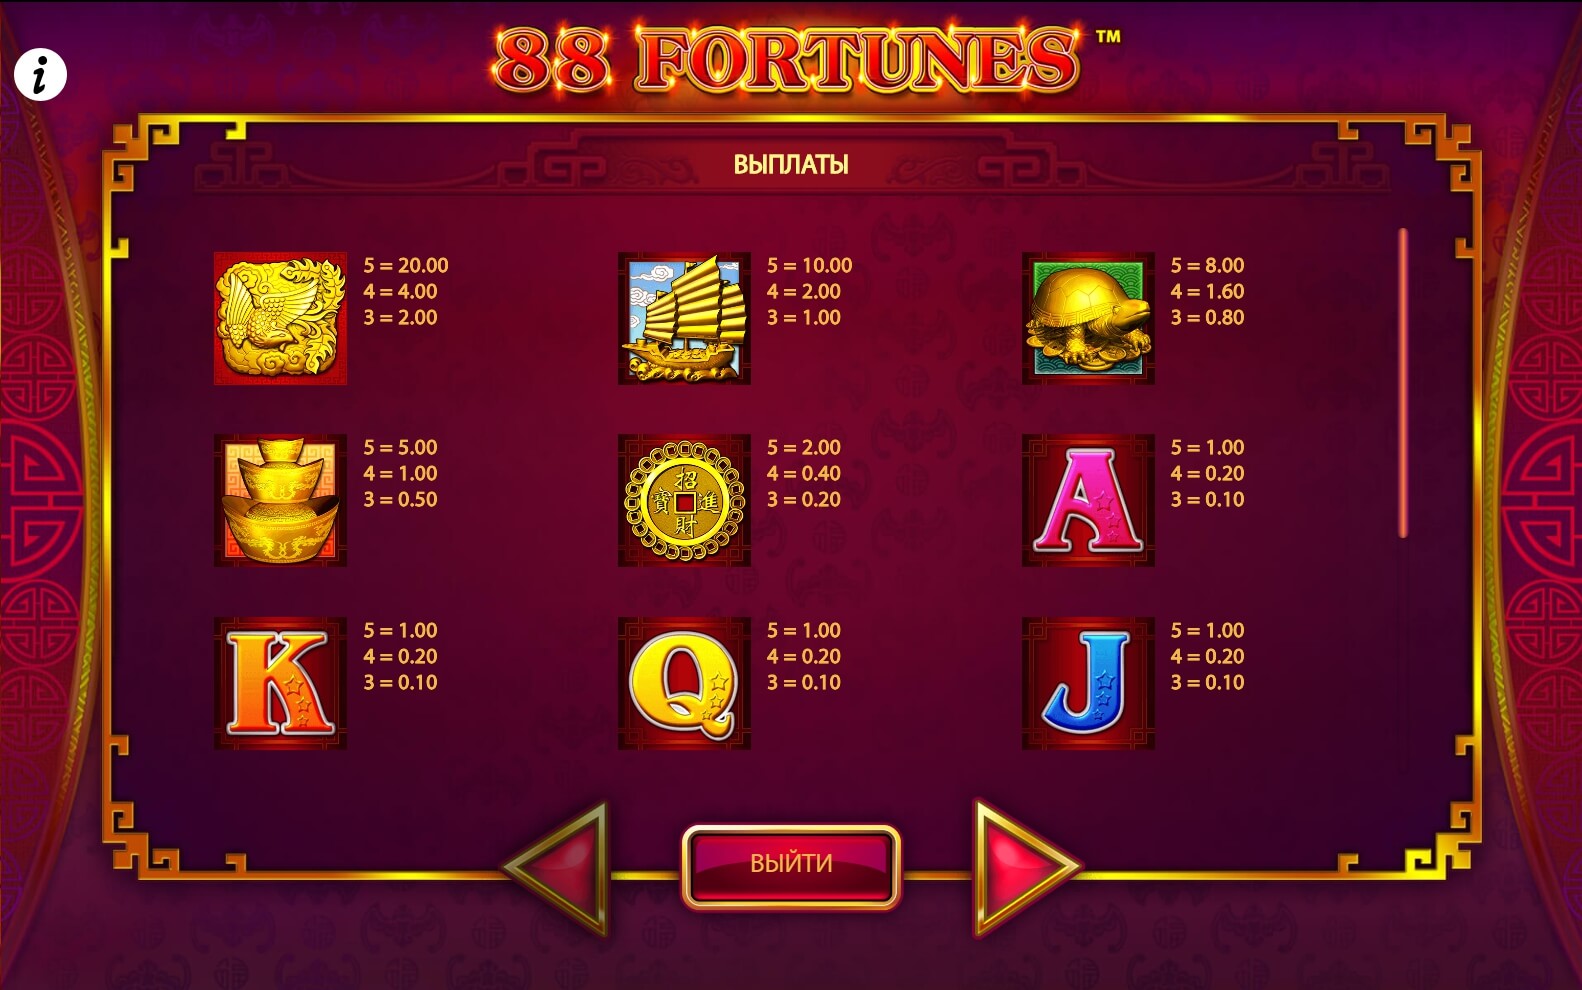 88 fortunes slot machine detail image 4